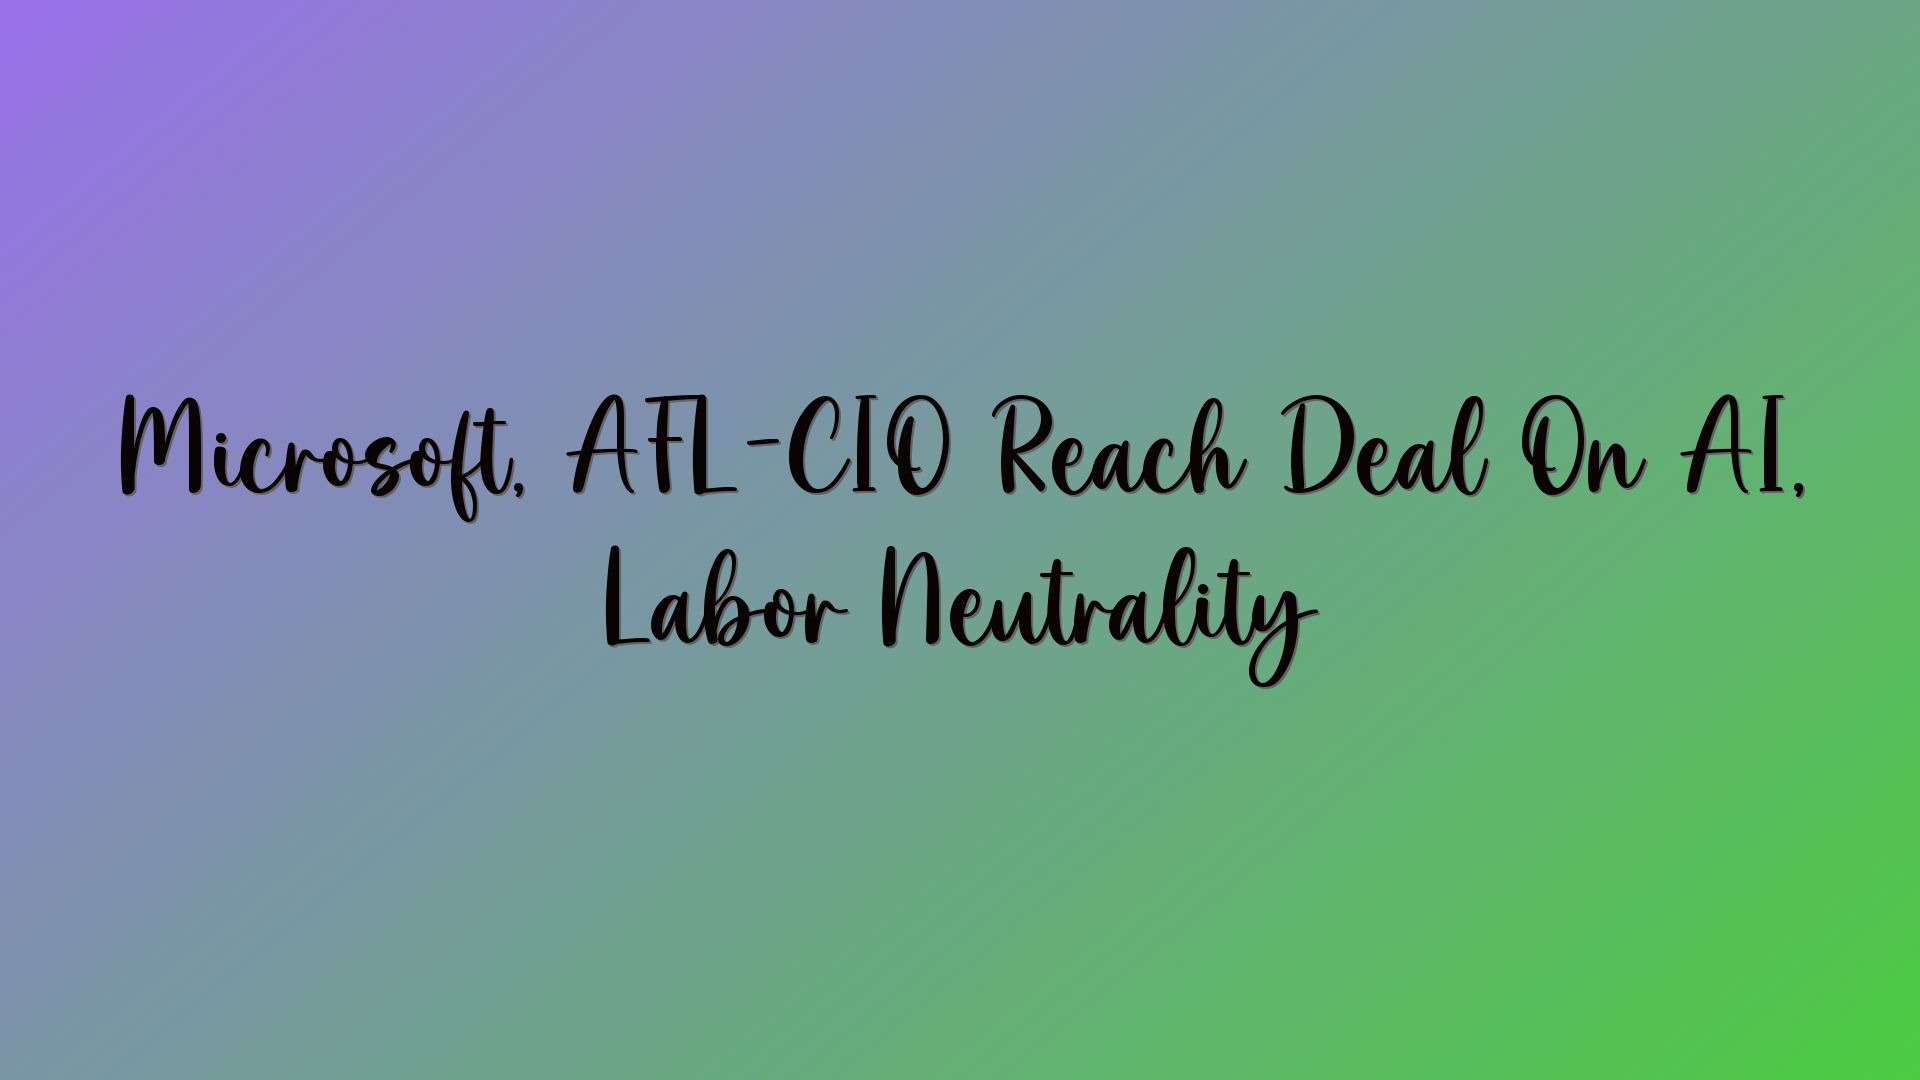 Microsoft, AFL-CIO Reach Deal On AI, Labor Neutrality